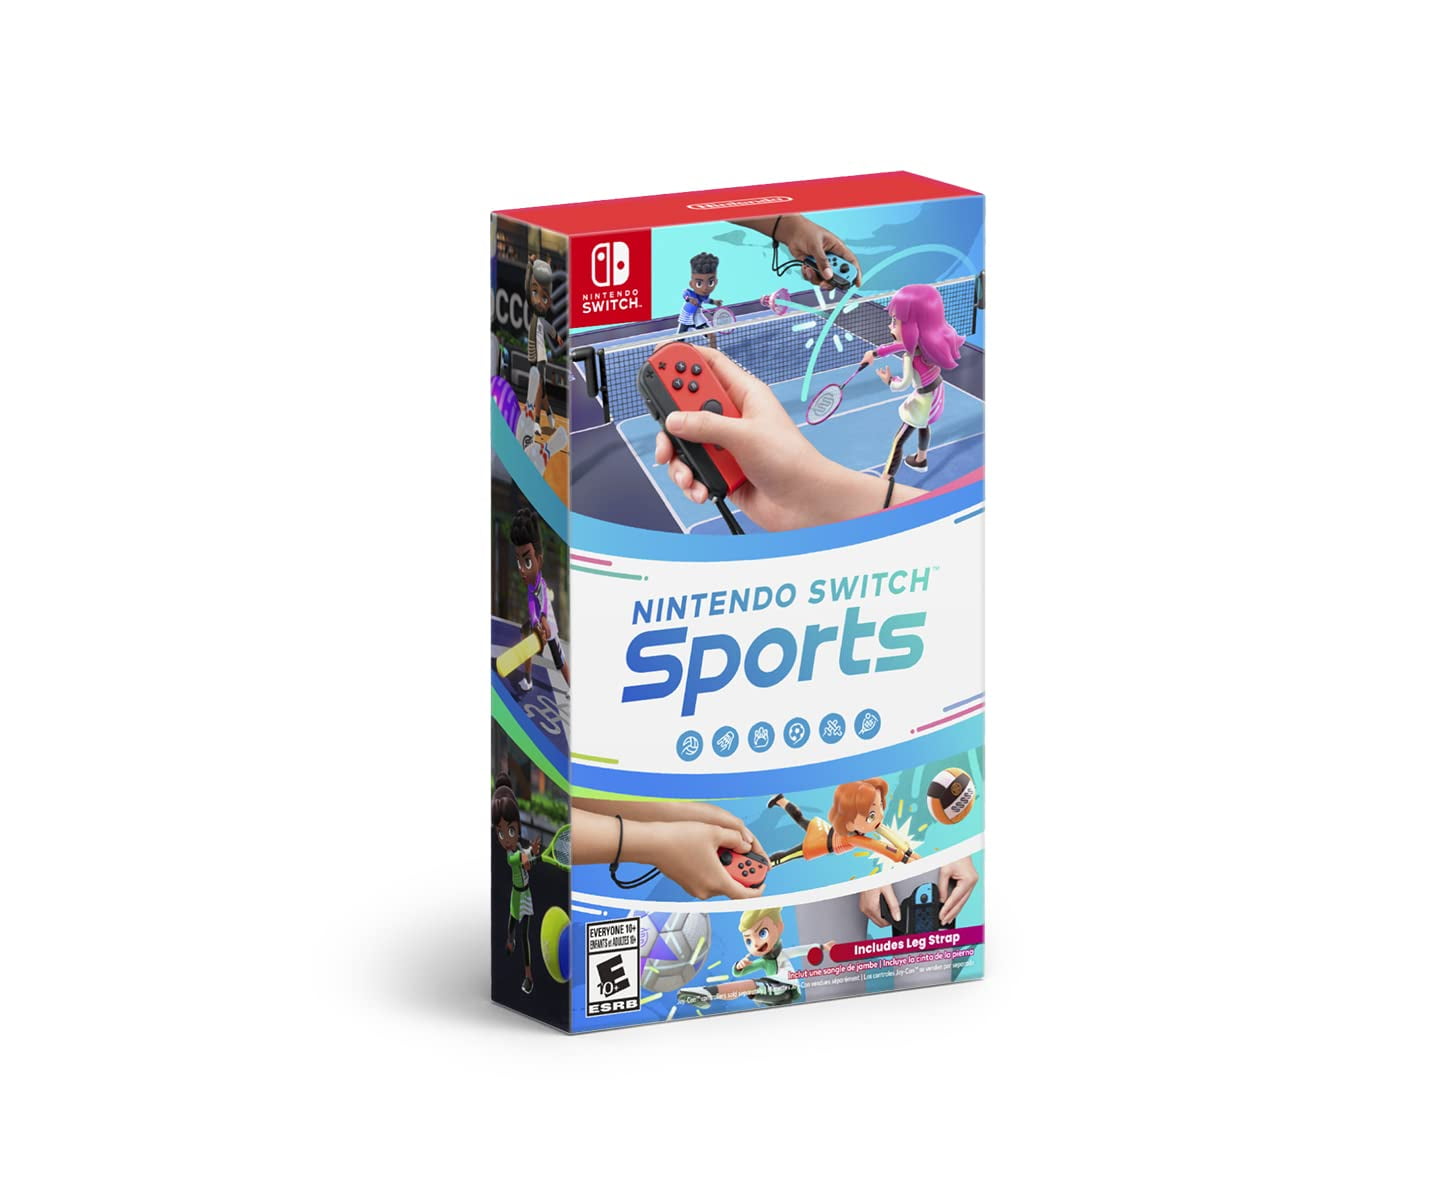 Nintendo Switch Sports with Leg Strap - International Region Free Version 